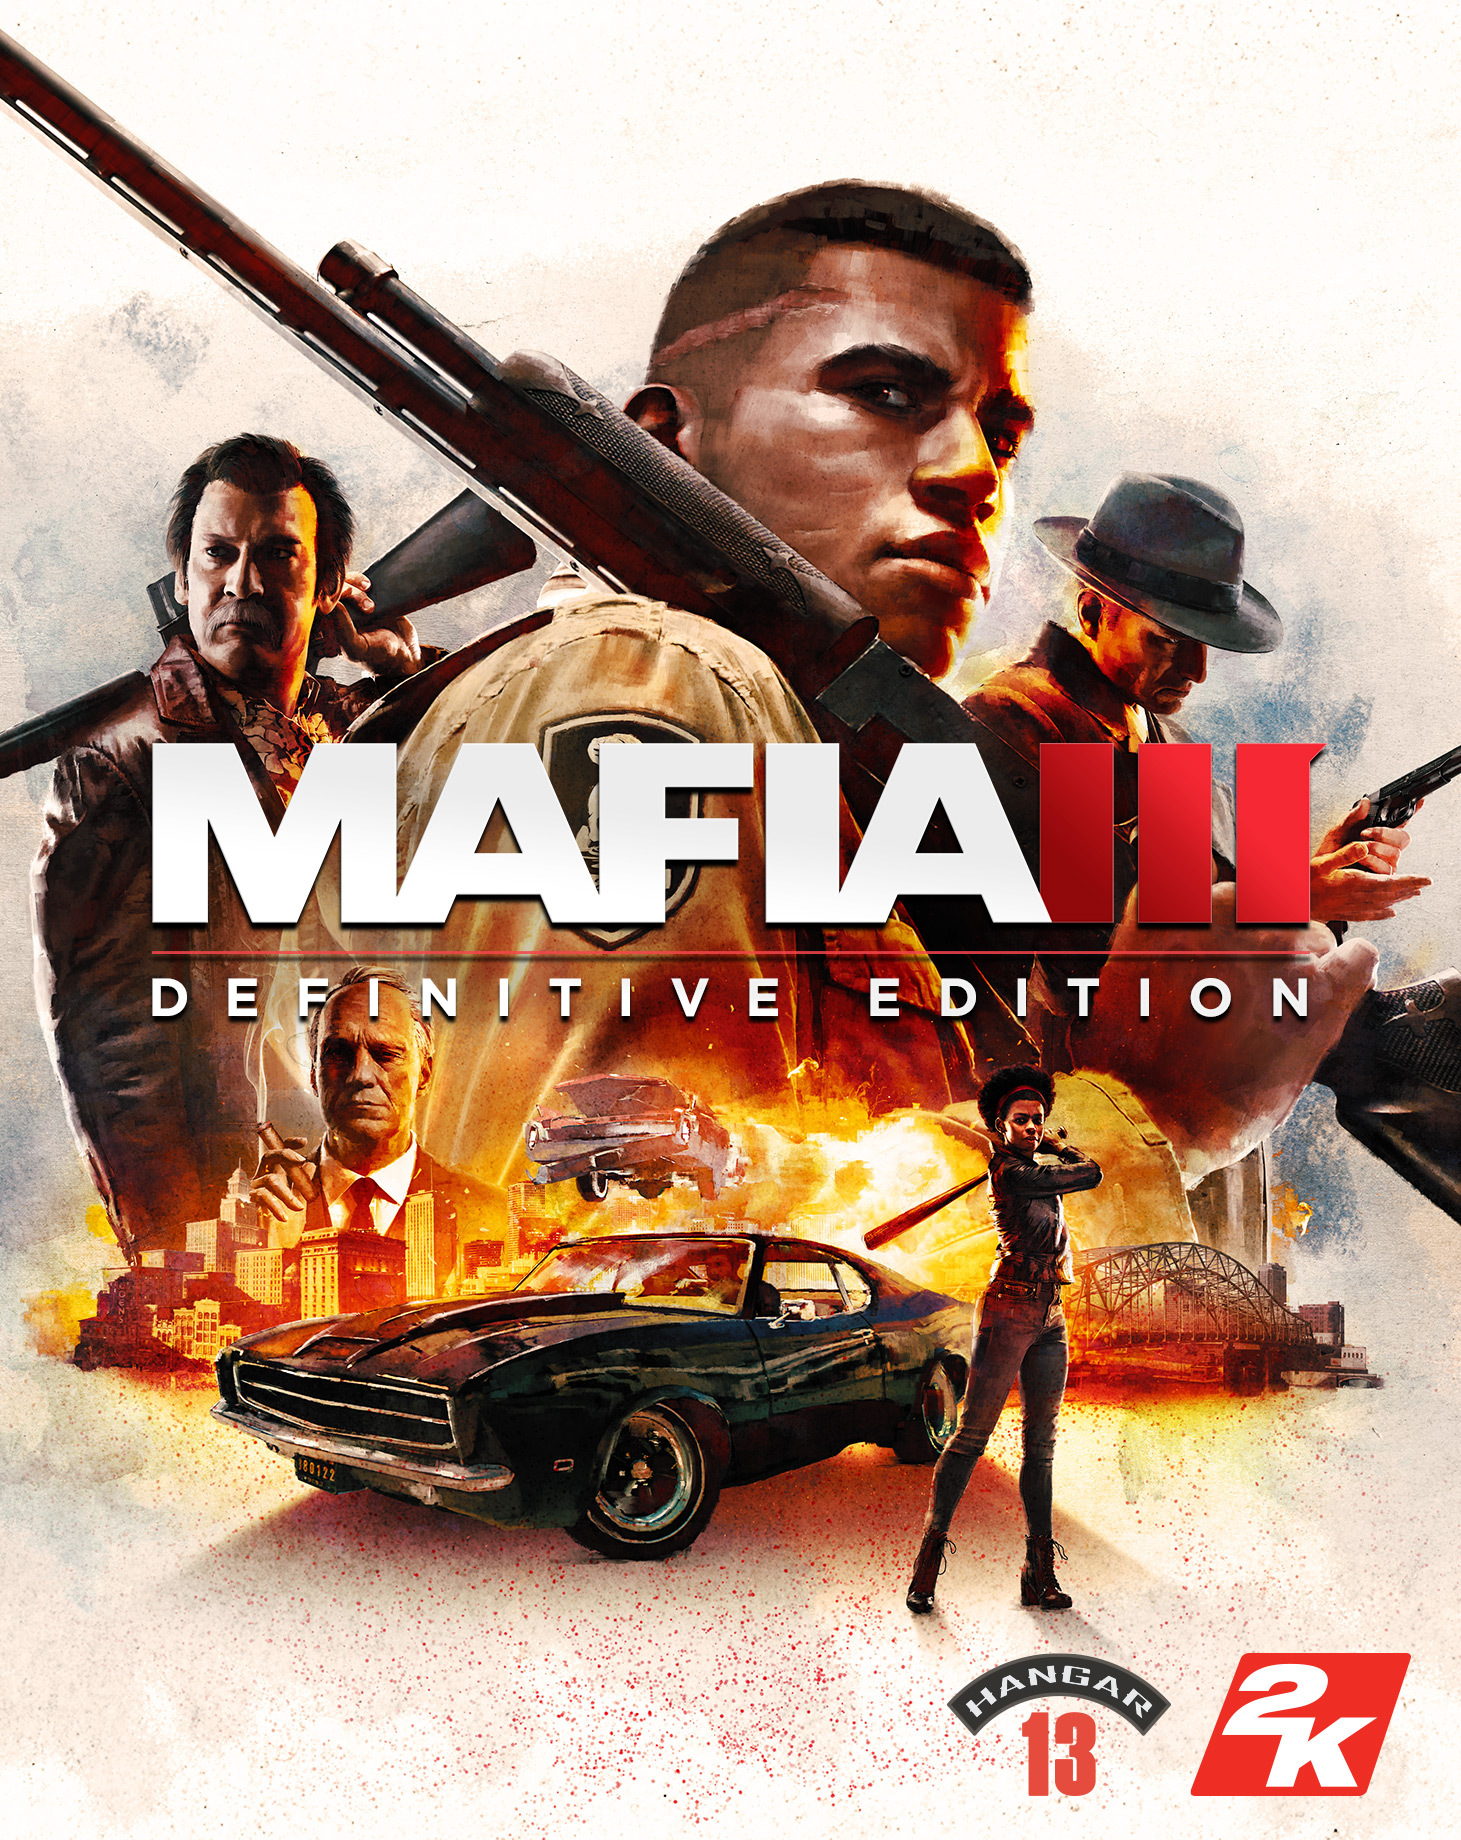 Mafia Trilogy physical edition is on 3 discs, no codes : r/MafiaTheGame